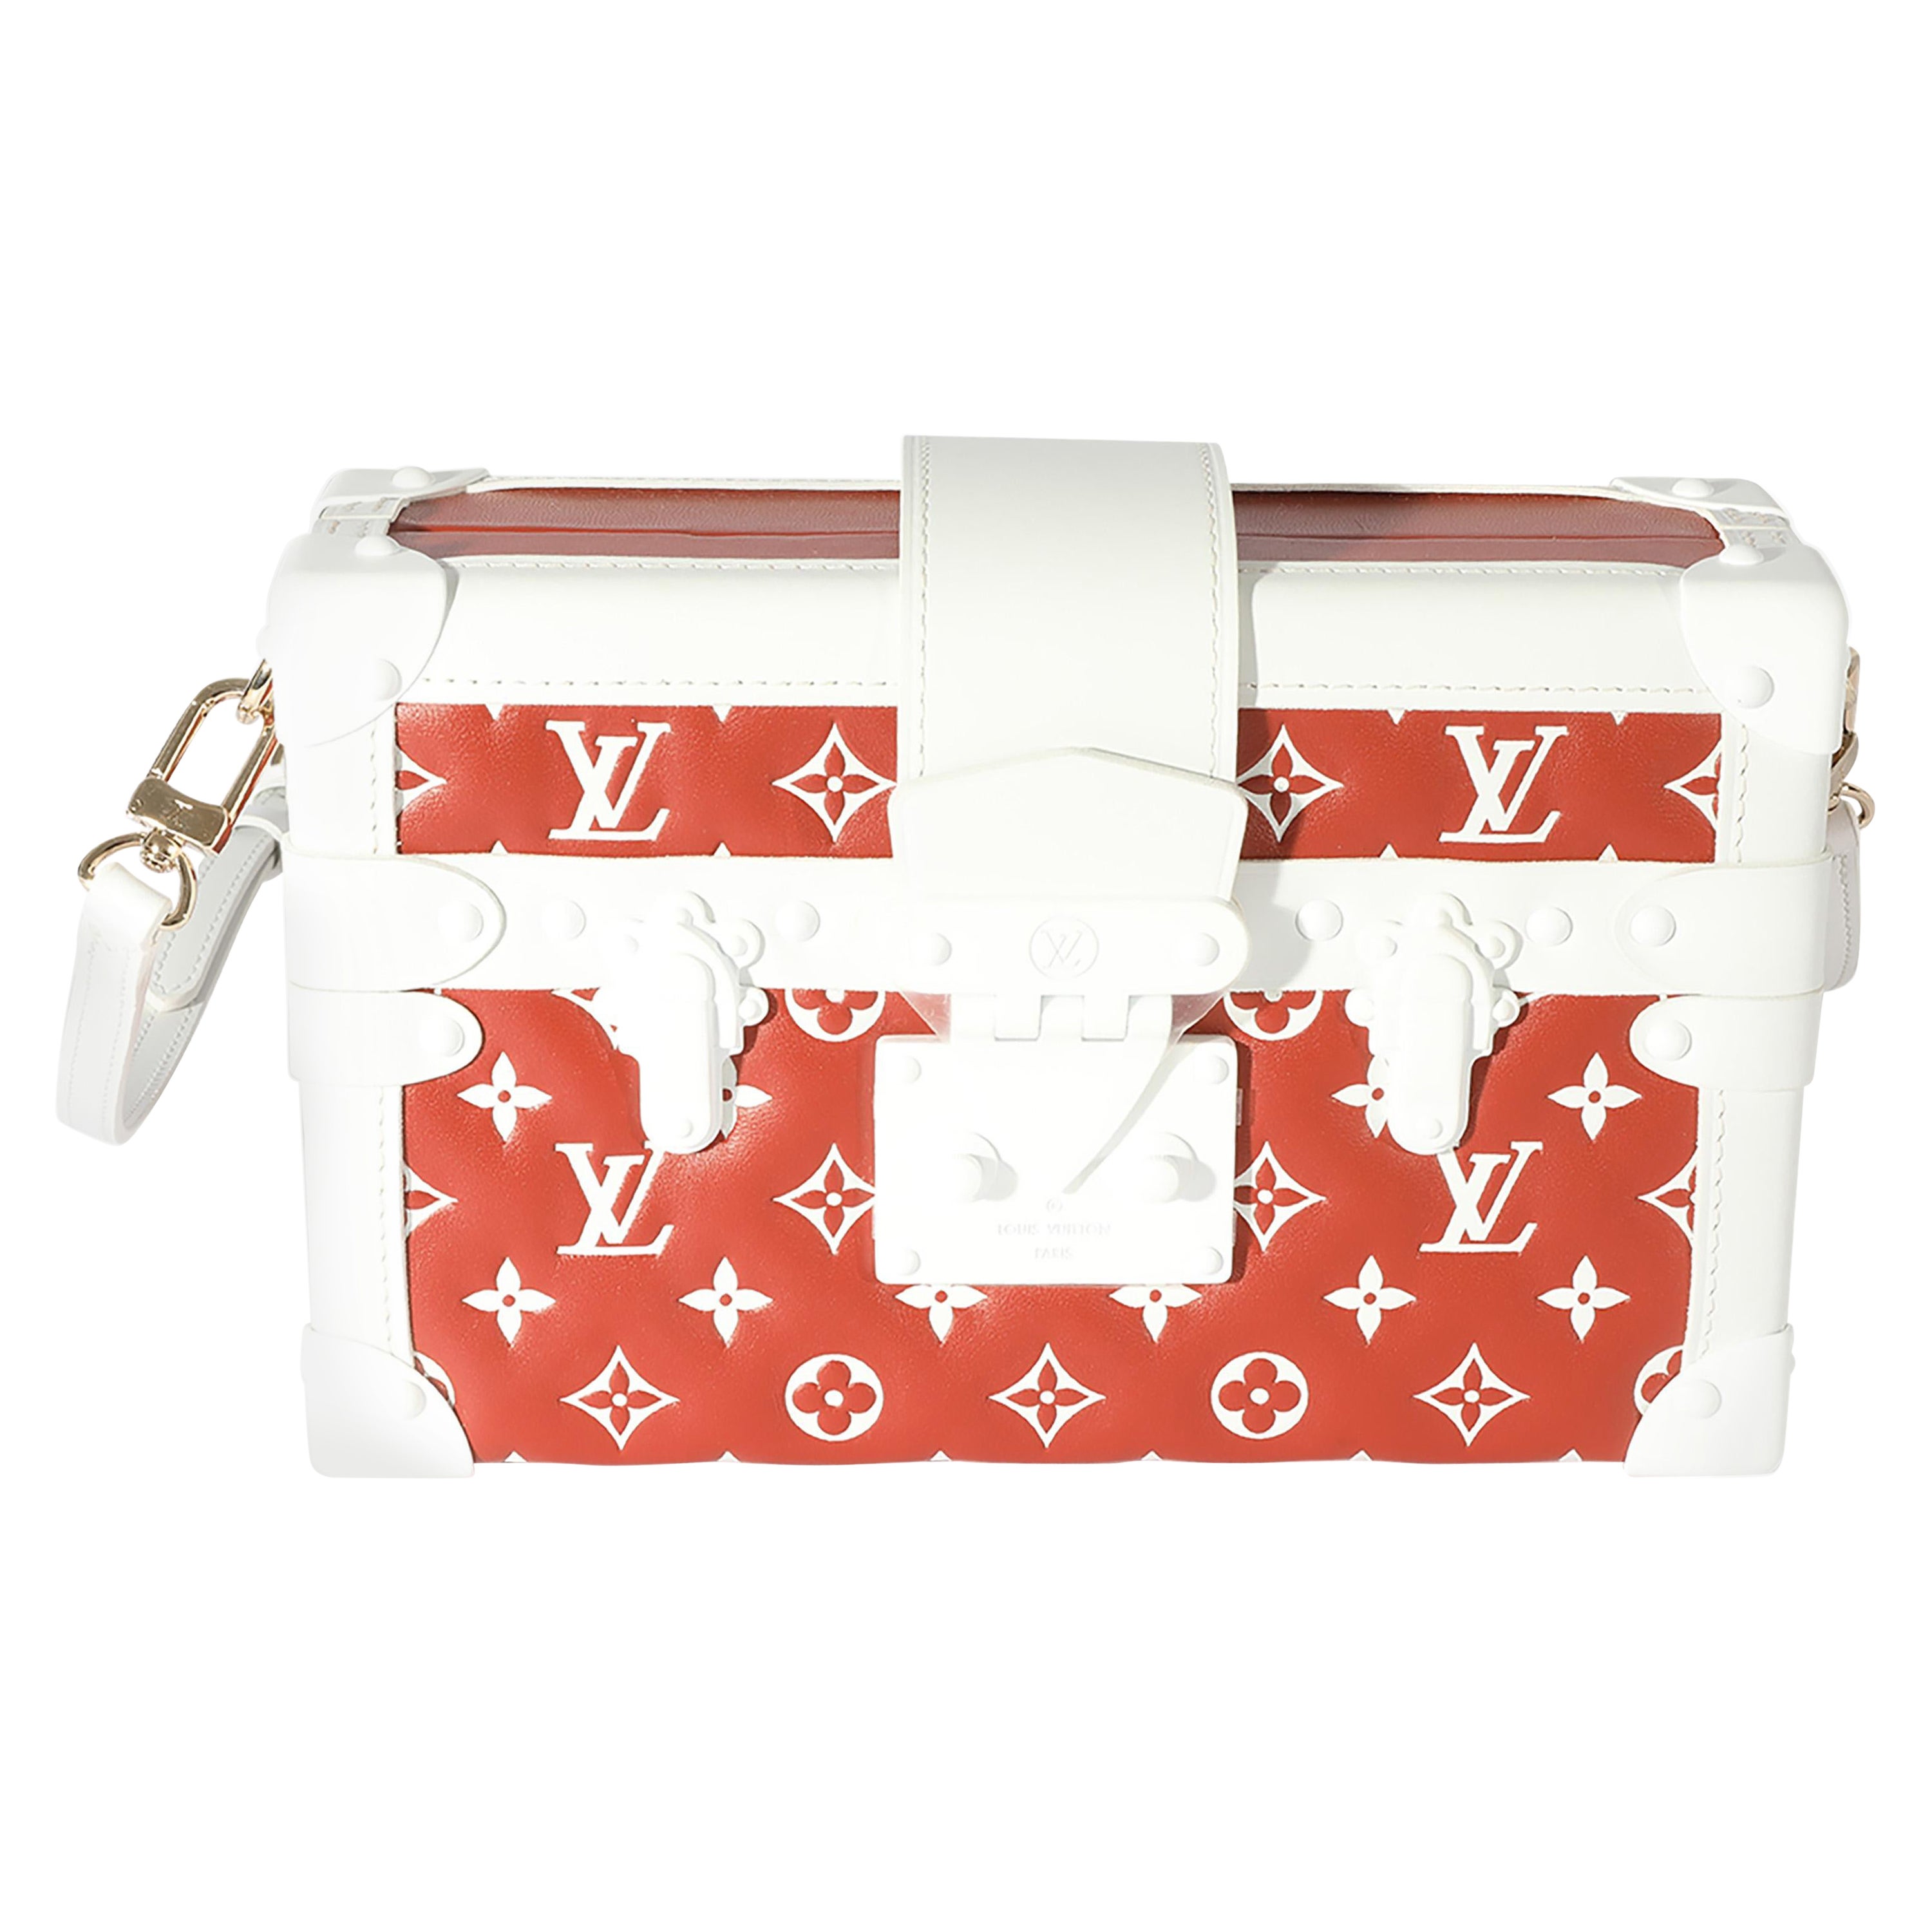 Louis Vuitton Trunk bag Petite Malle black/white monogram crossbody LV  Authentic